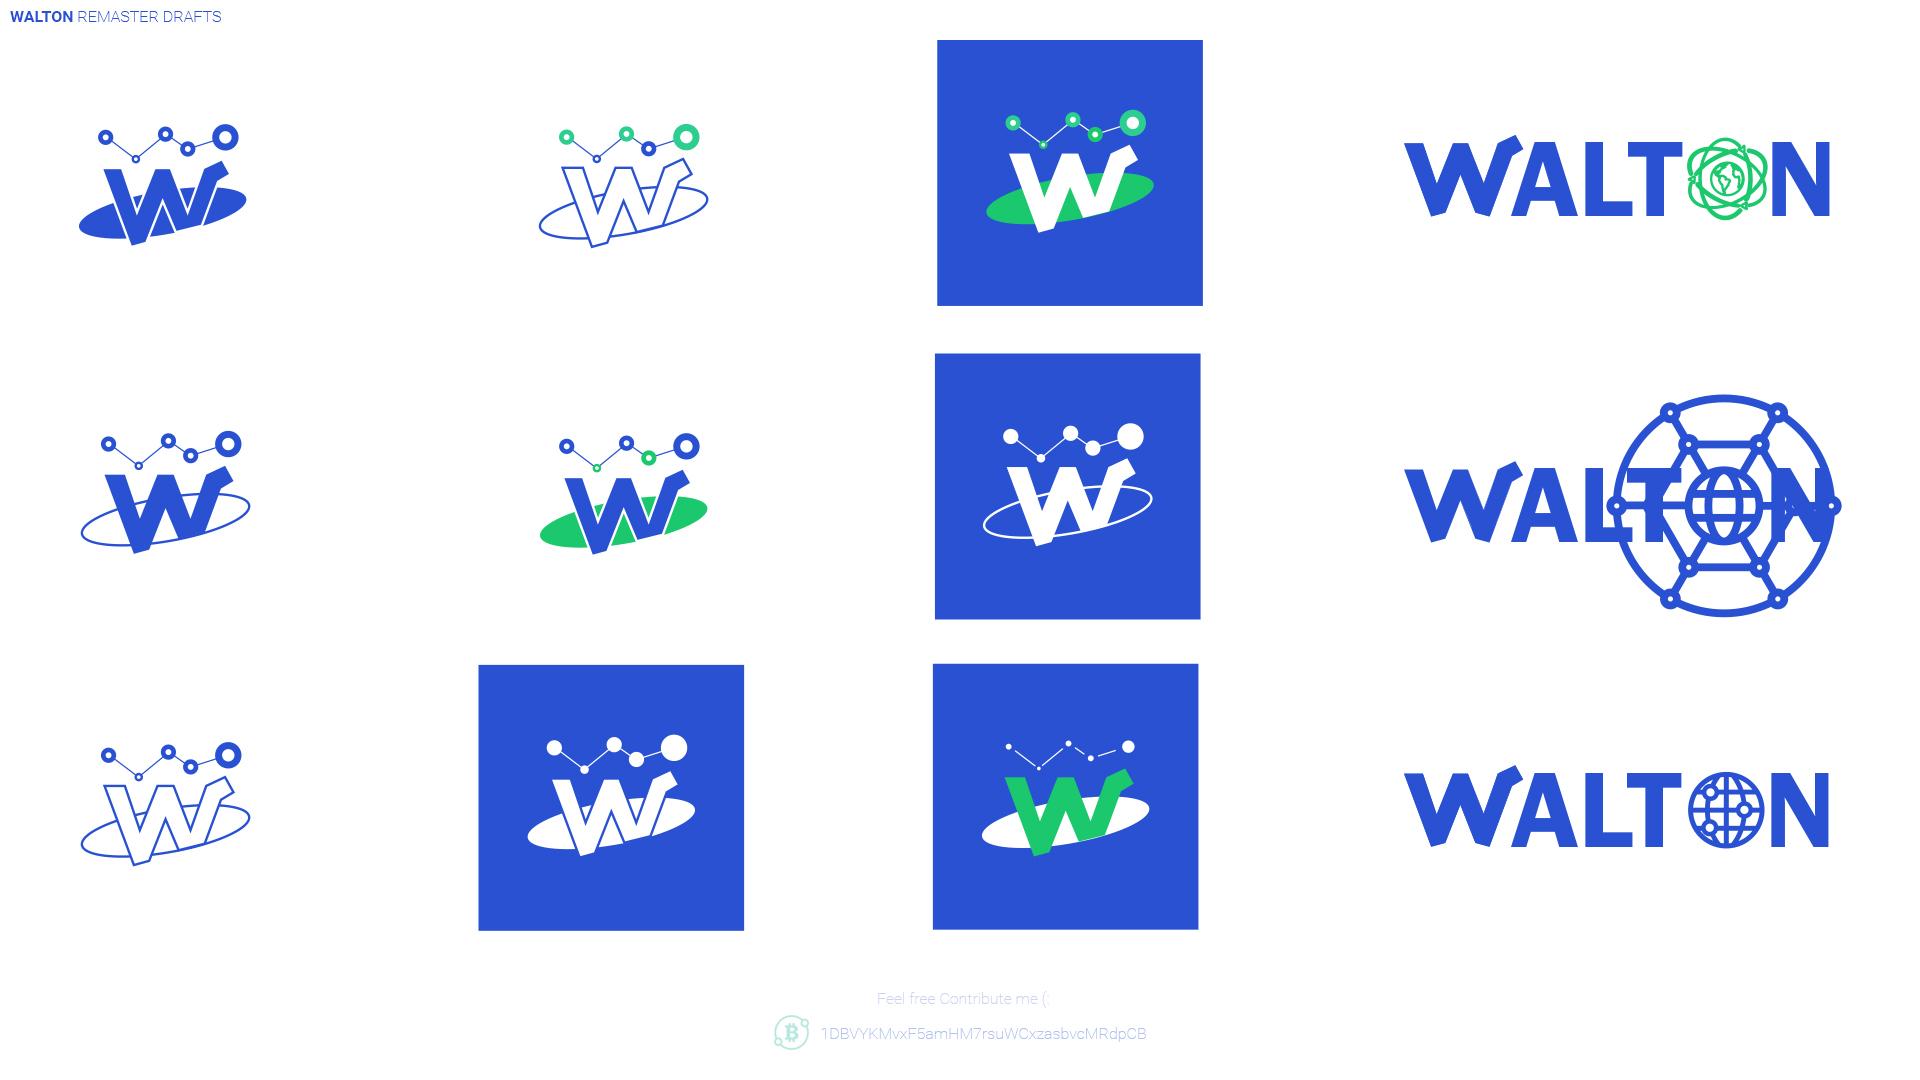 Walton Logo - Walton Logo Remaster them free PM for .ai